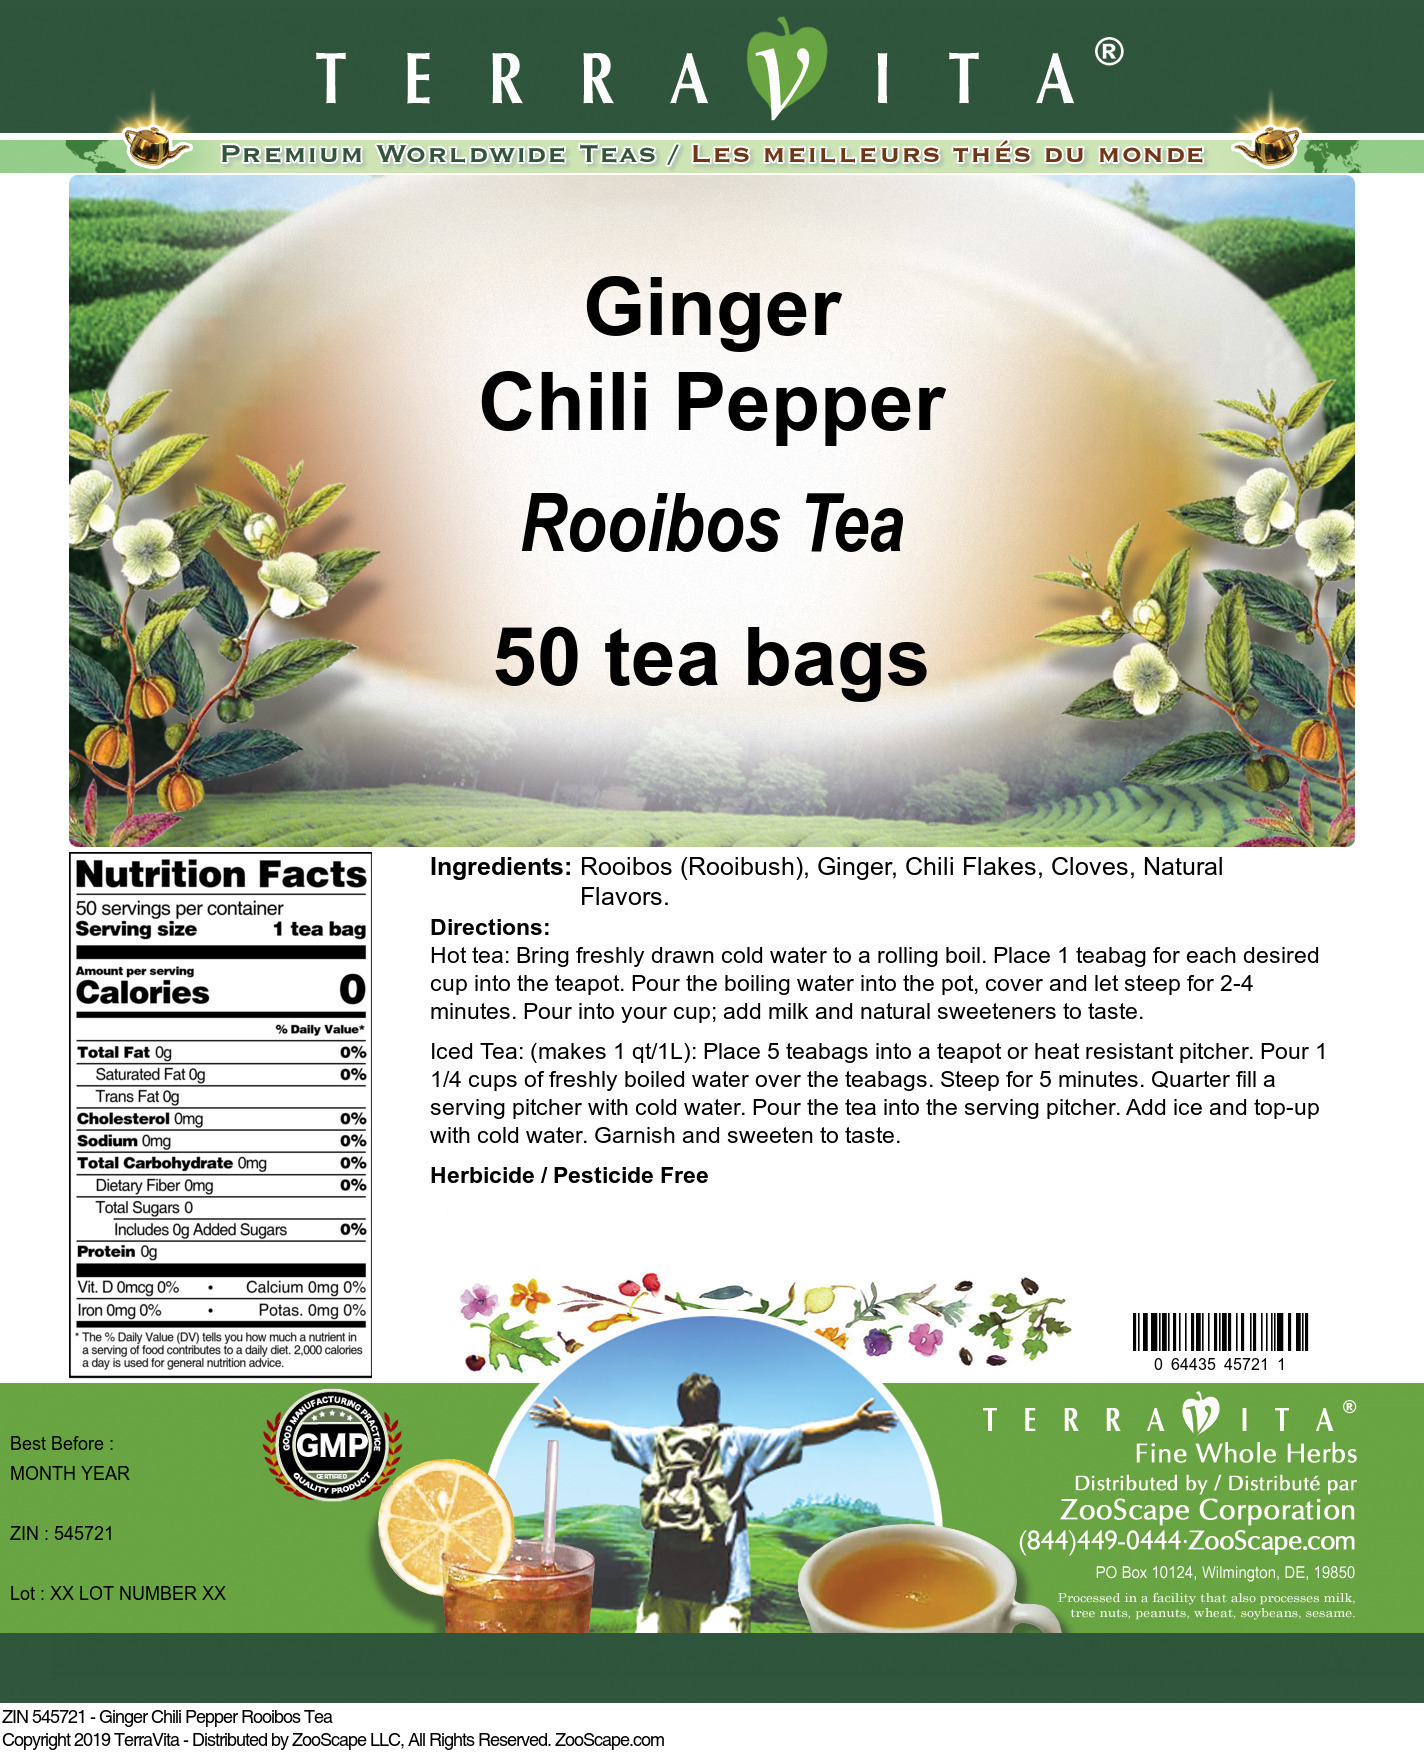 Ginger Chili Pepper Rooibos Tea - Label